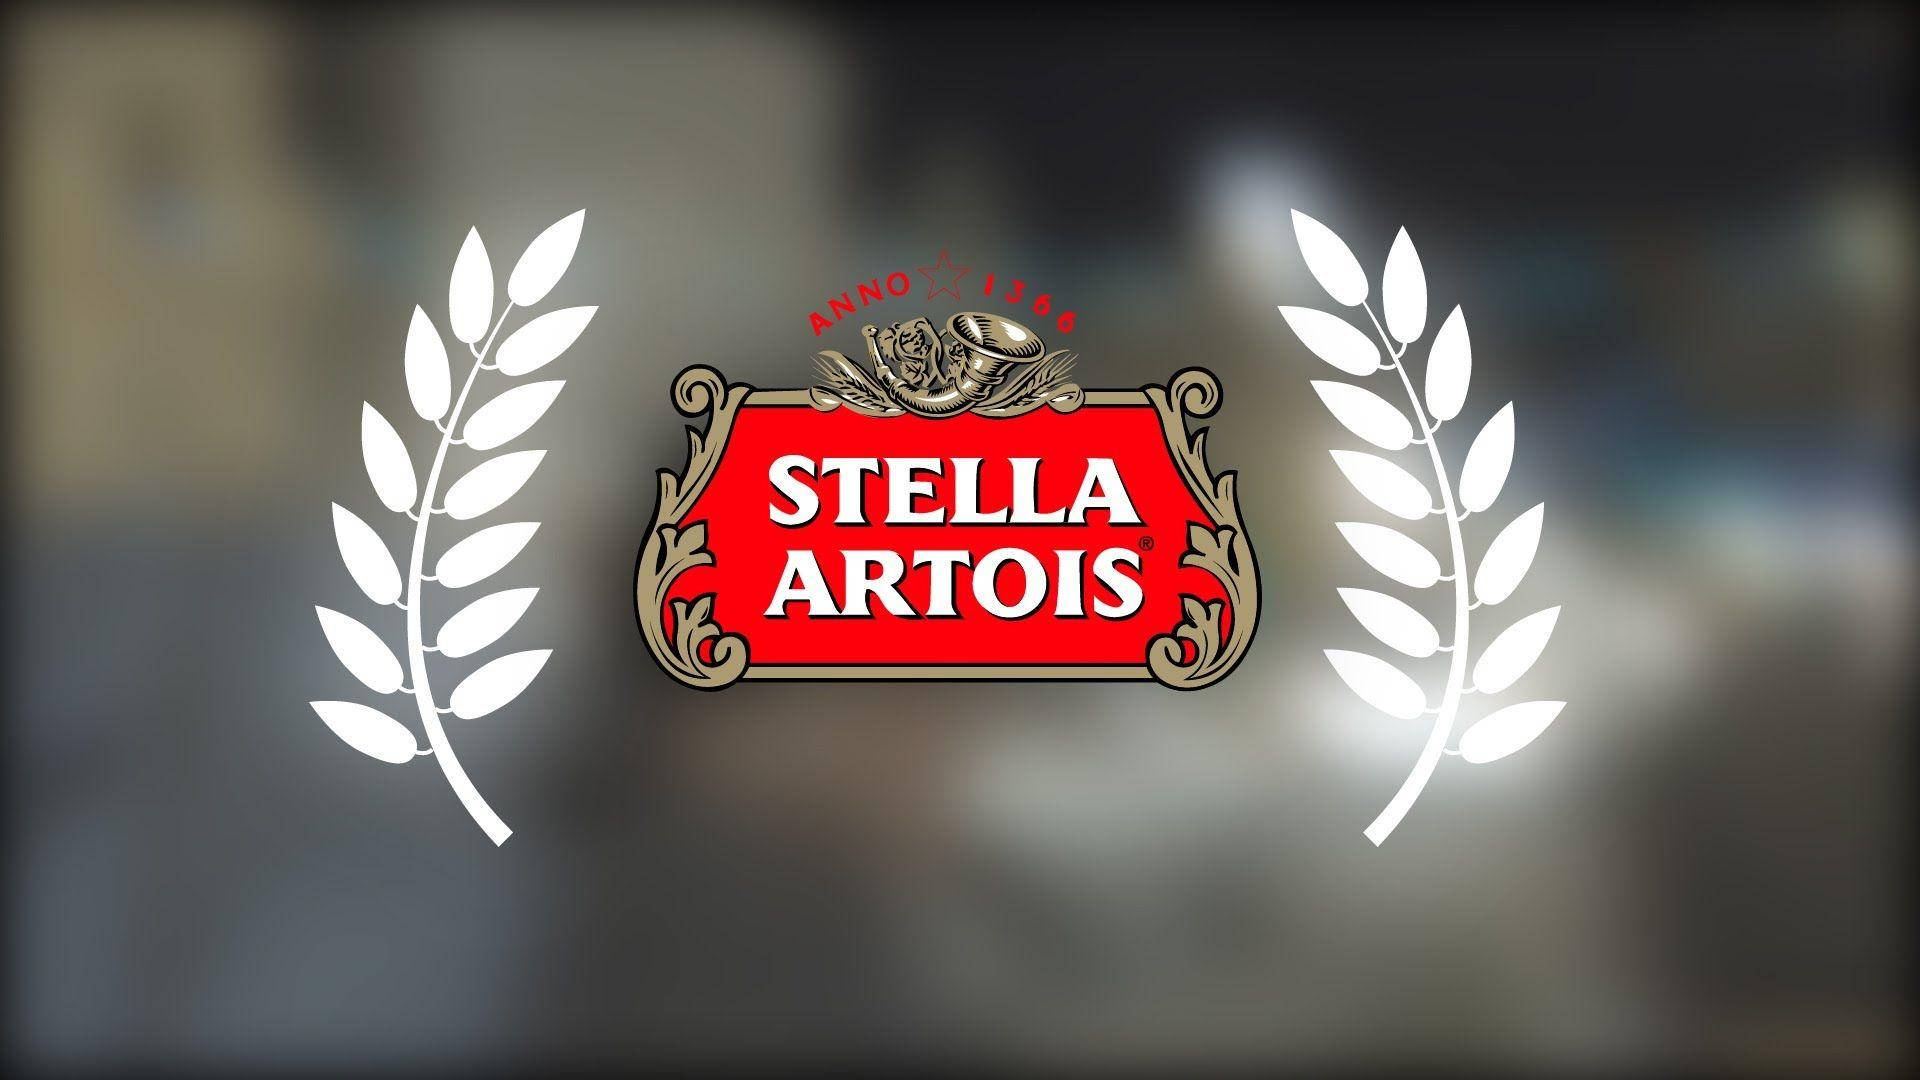 Clásicologotipo De La Cerveza Belga Stella Artois. Fondo de pantalla